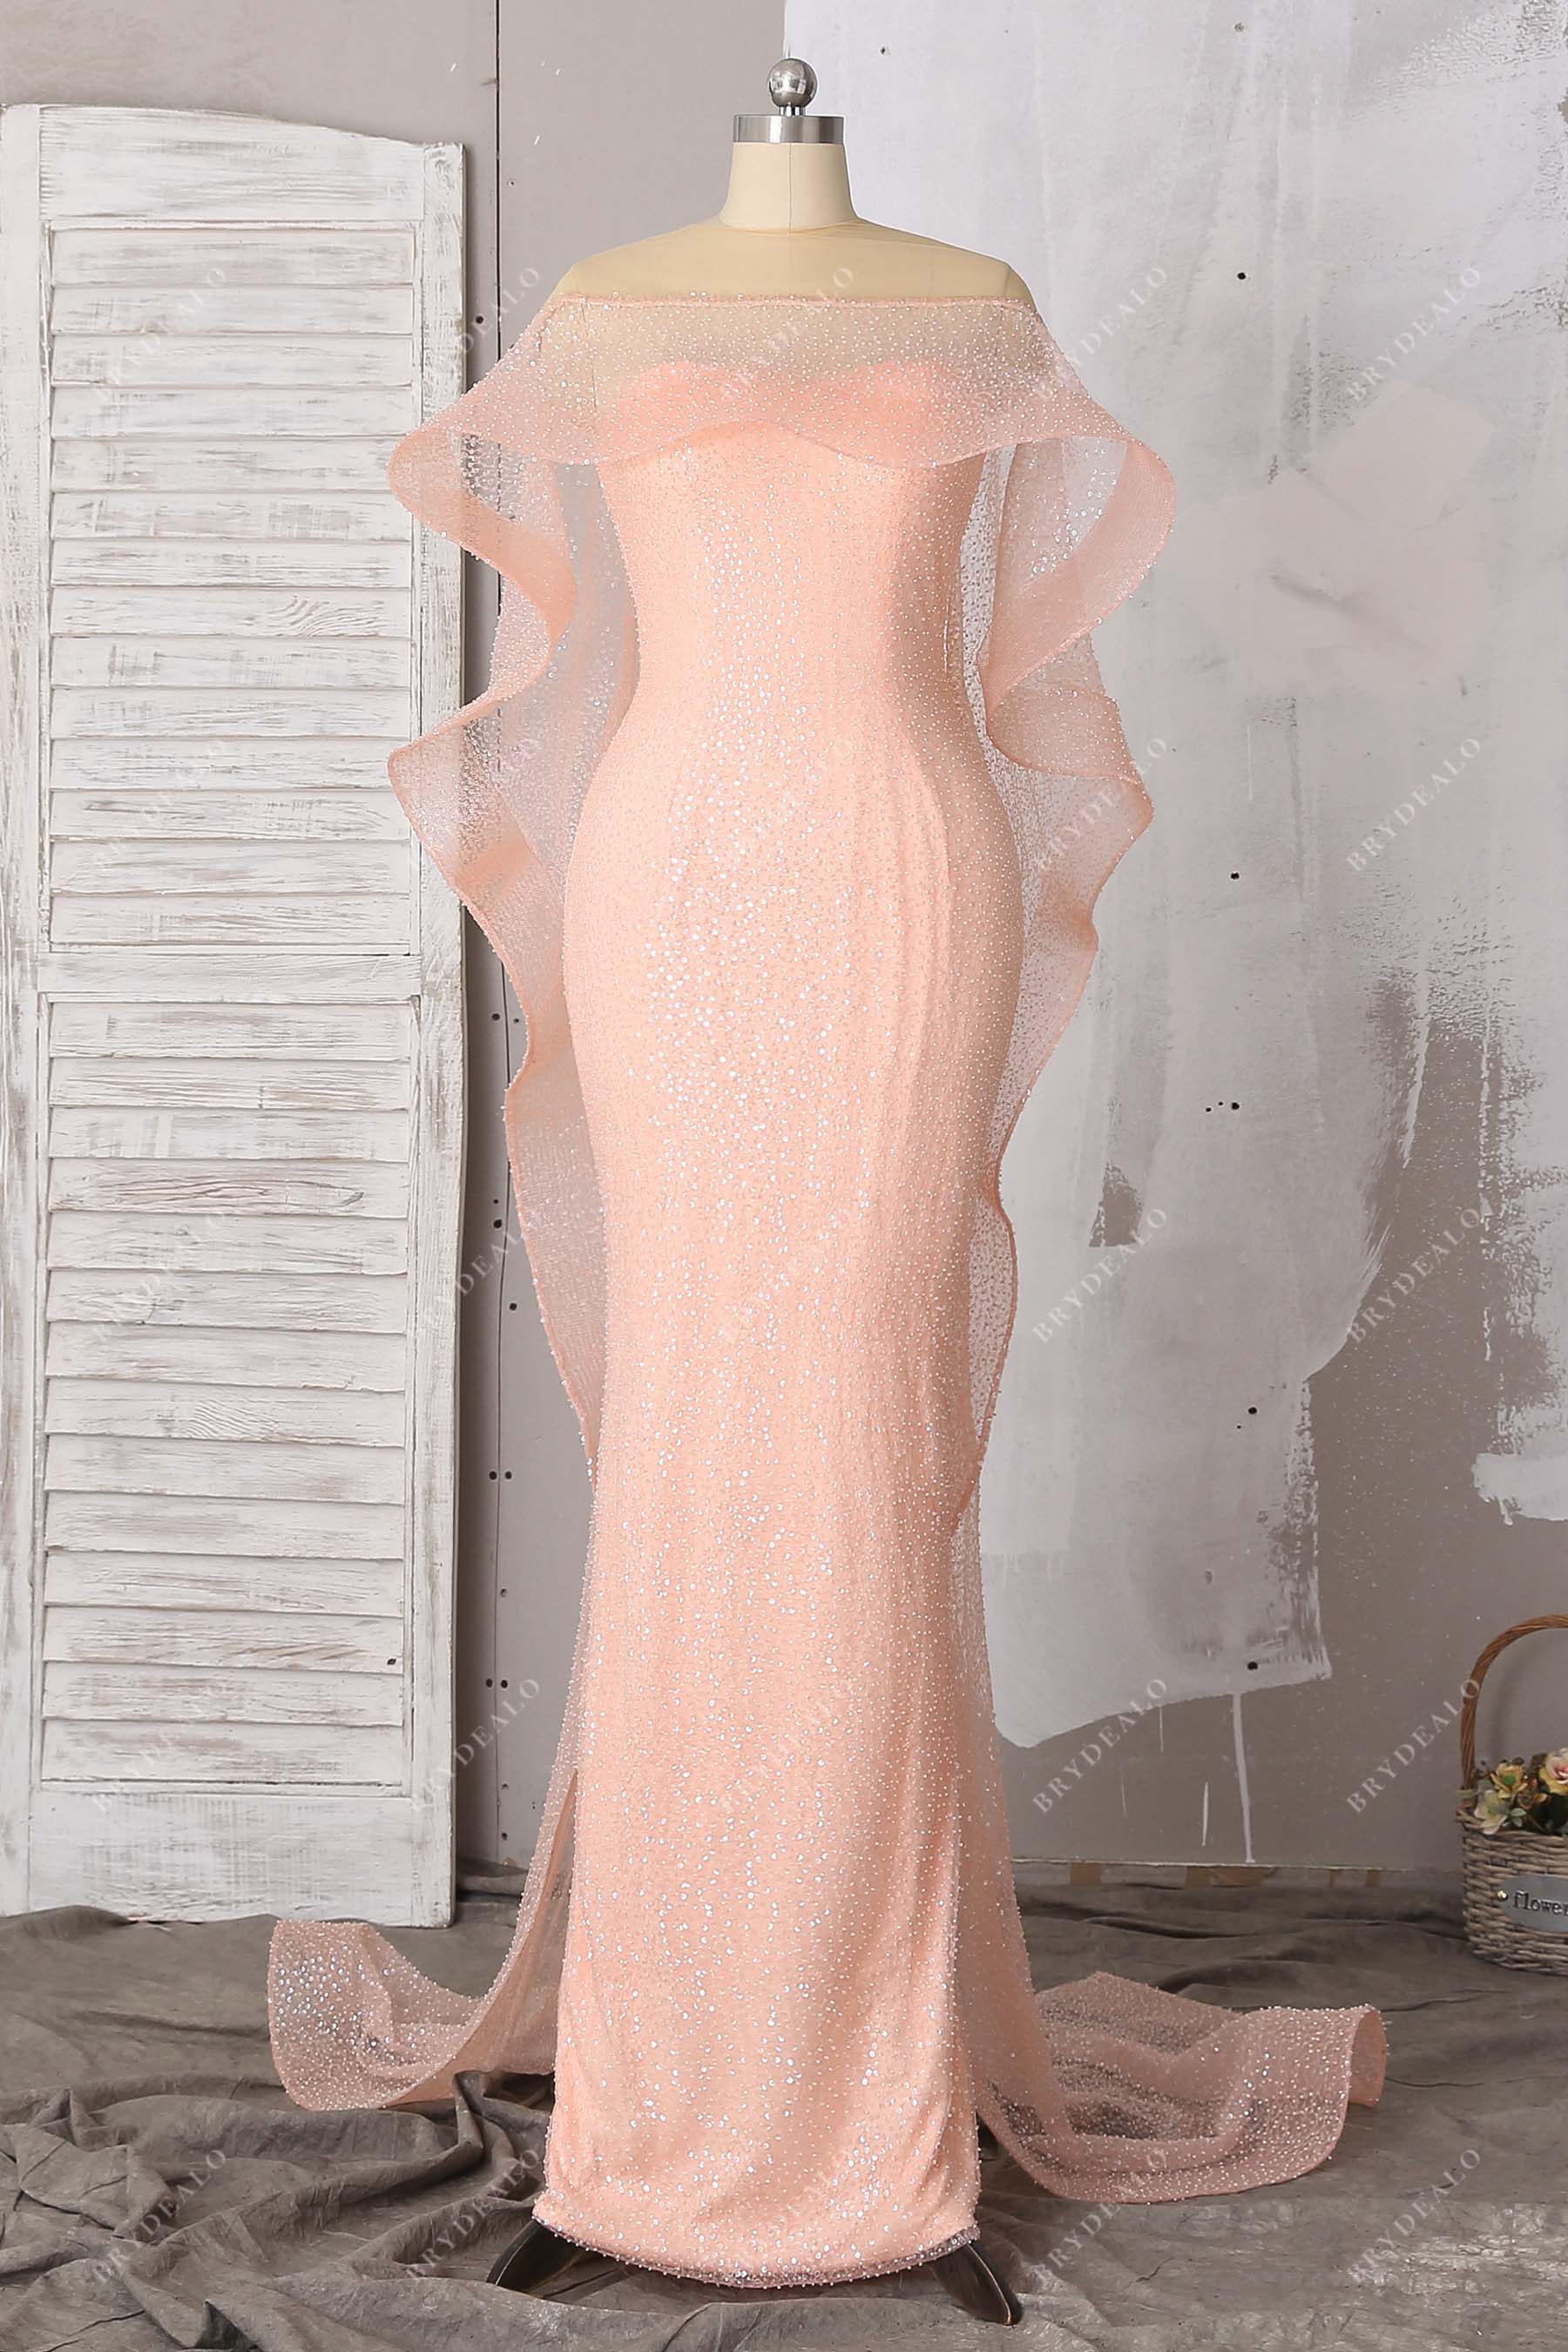 shimmery peach pink sheath prom dress